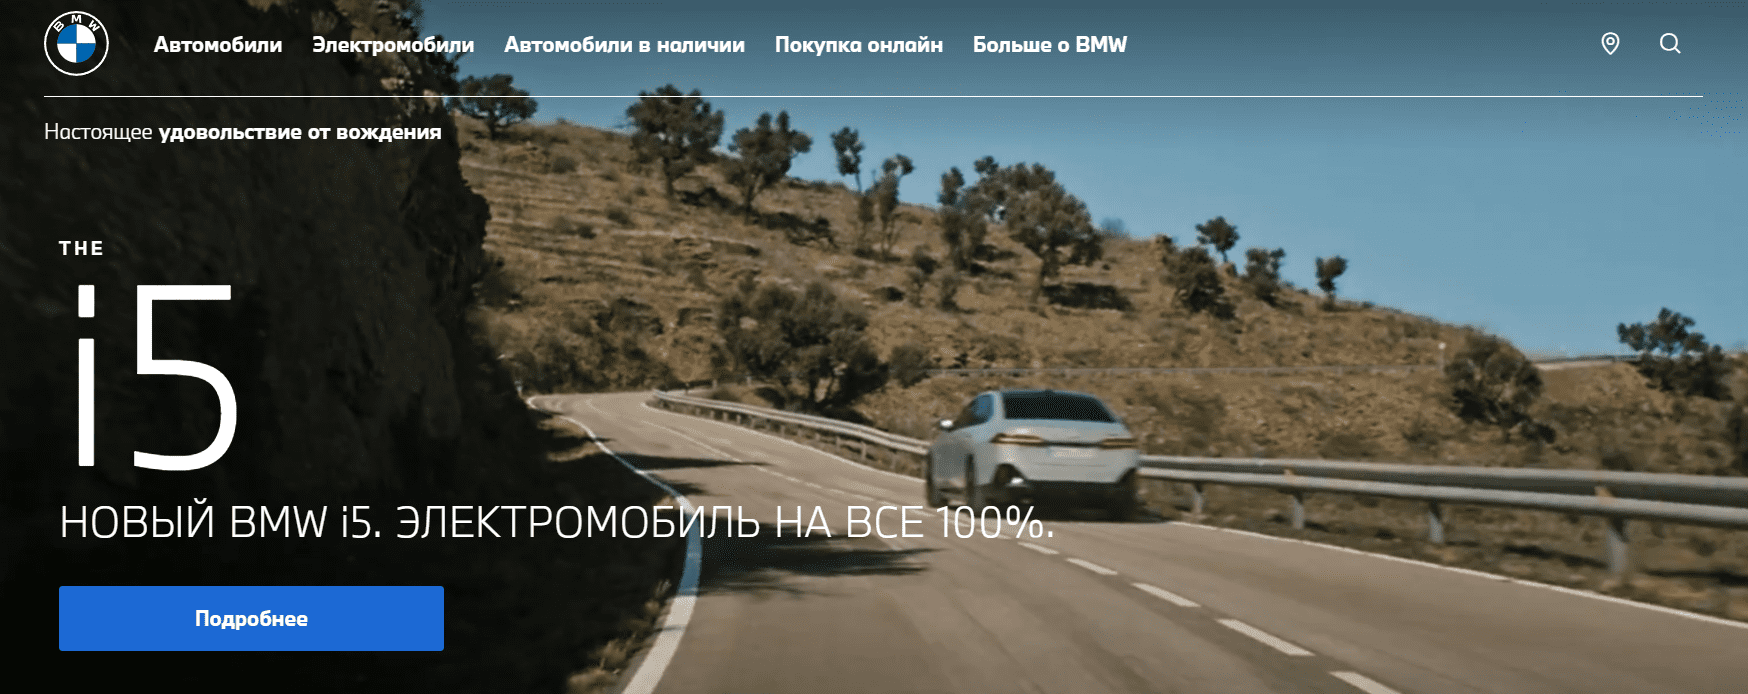 BMW в Беларуси (bmw.by) - официальный сайт